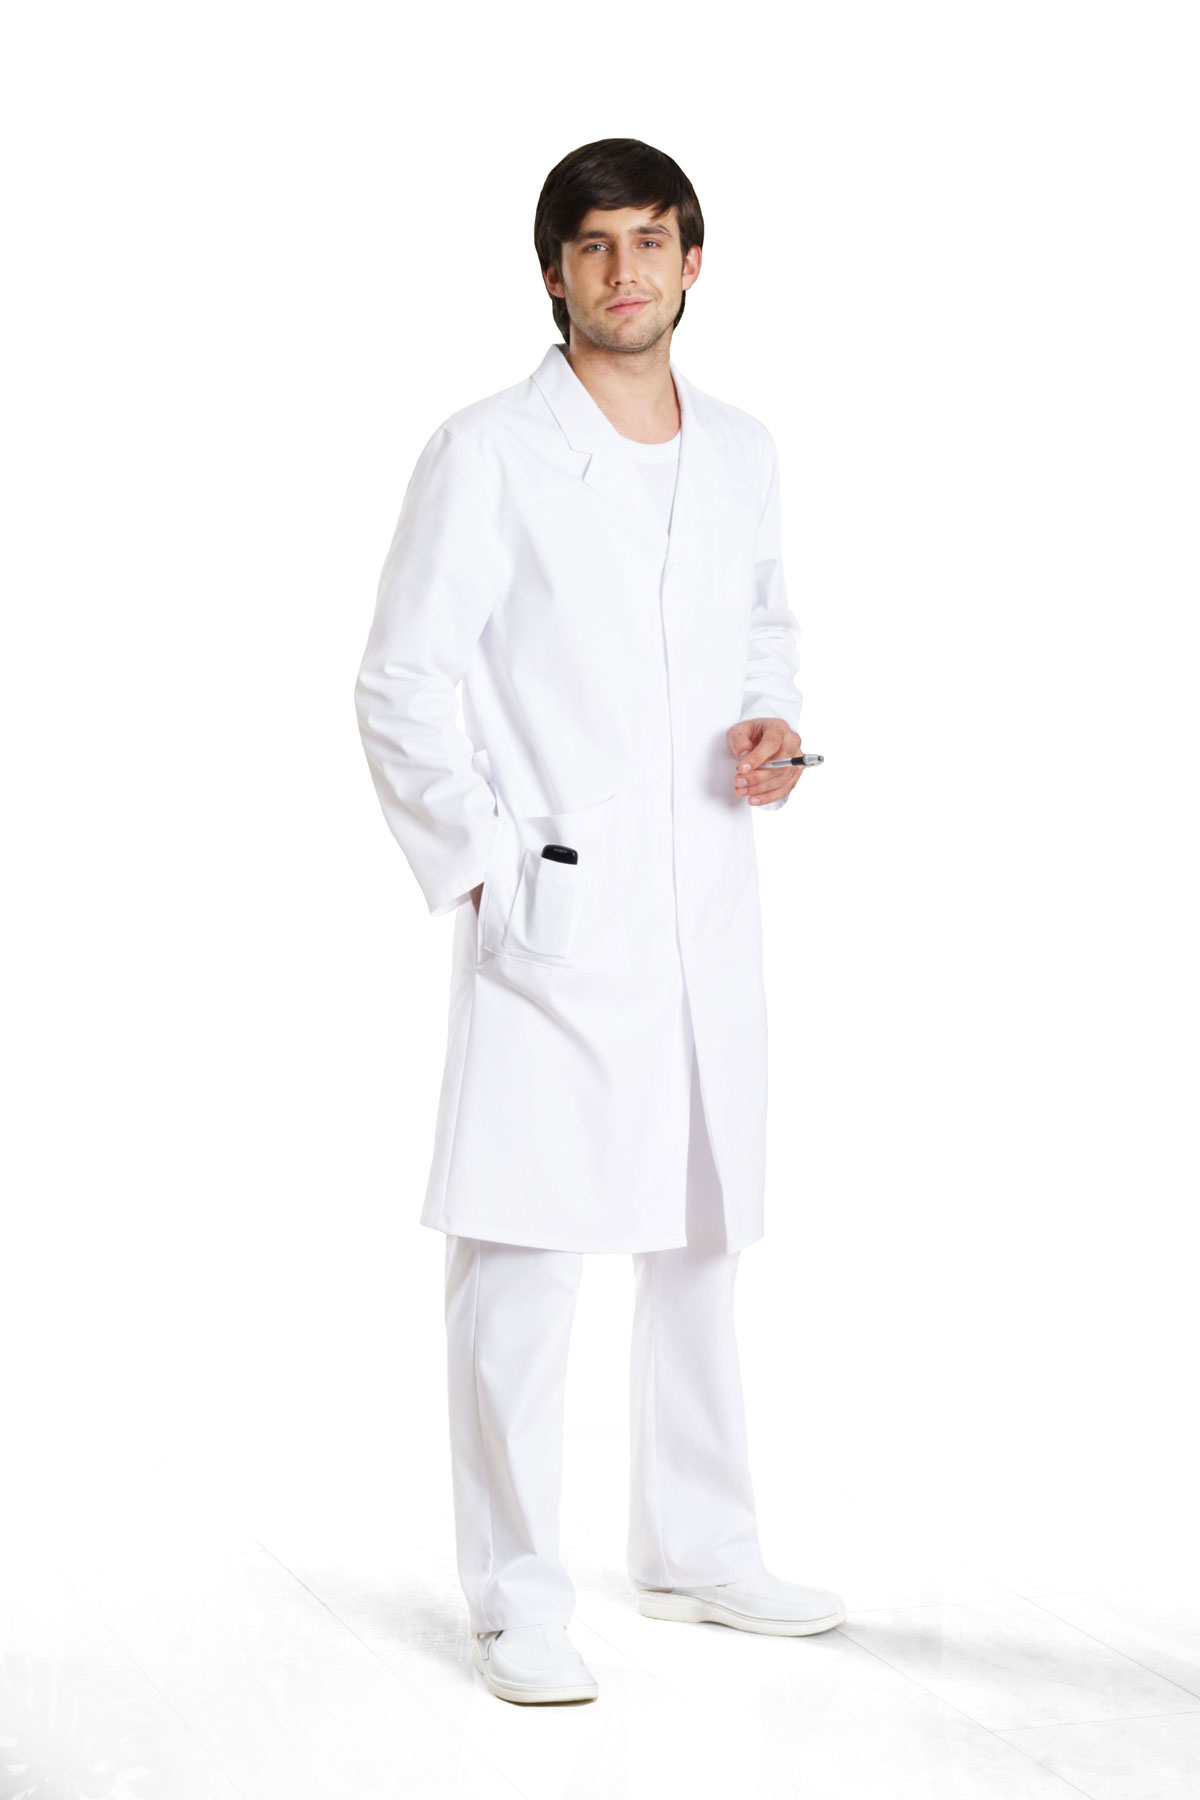 Белый халат медицинский мужской. Медицинский костюм мужской Медстиль. Халат медицинский мужской. Врачебный халат мужской. Мужчина в медицинском халате.